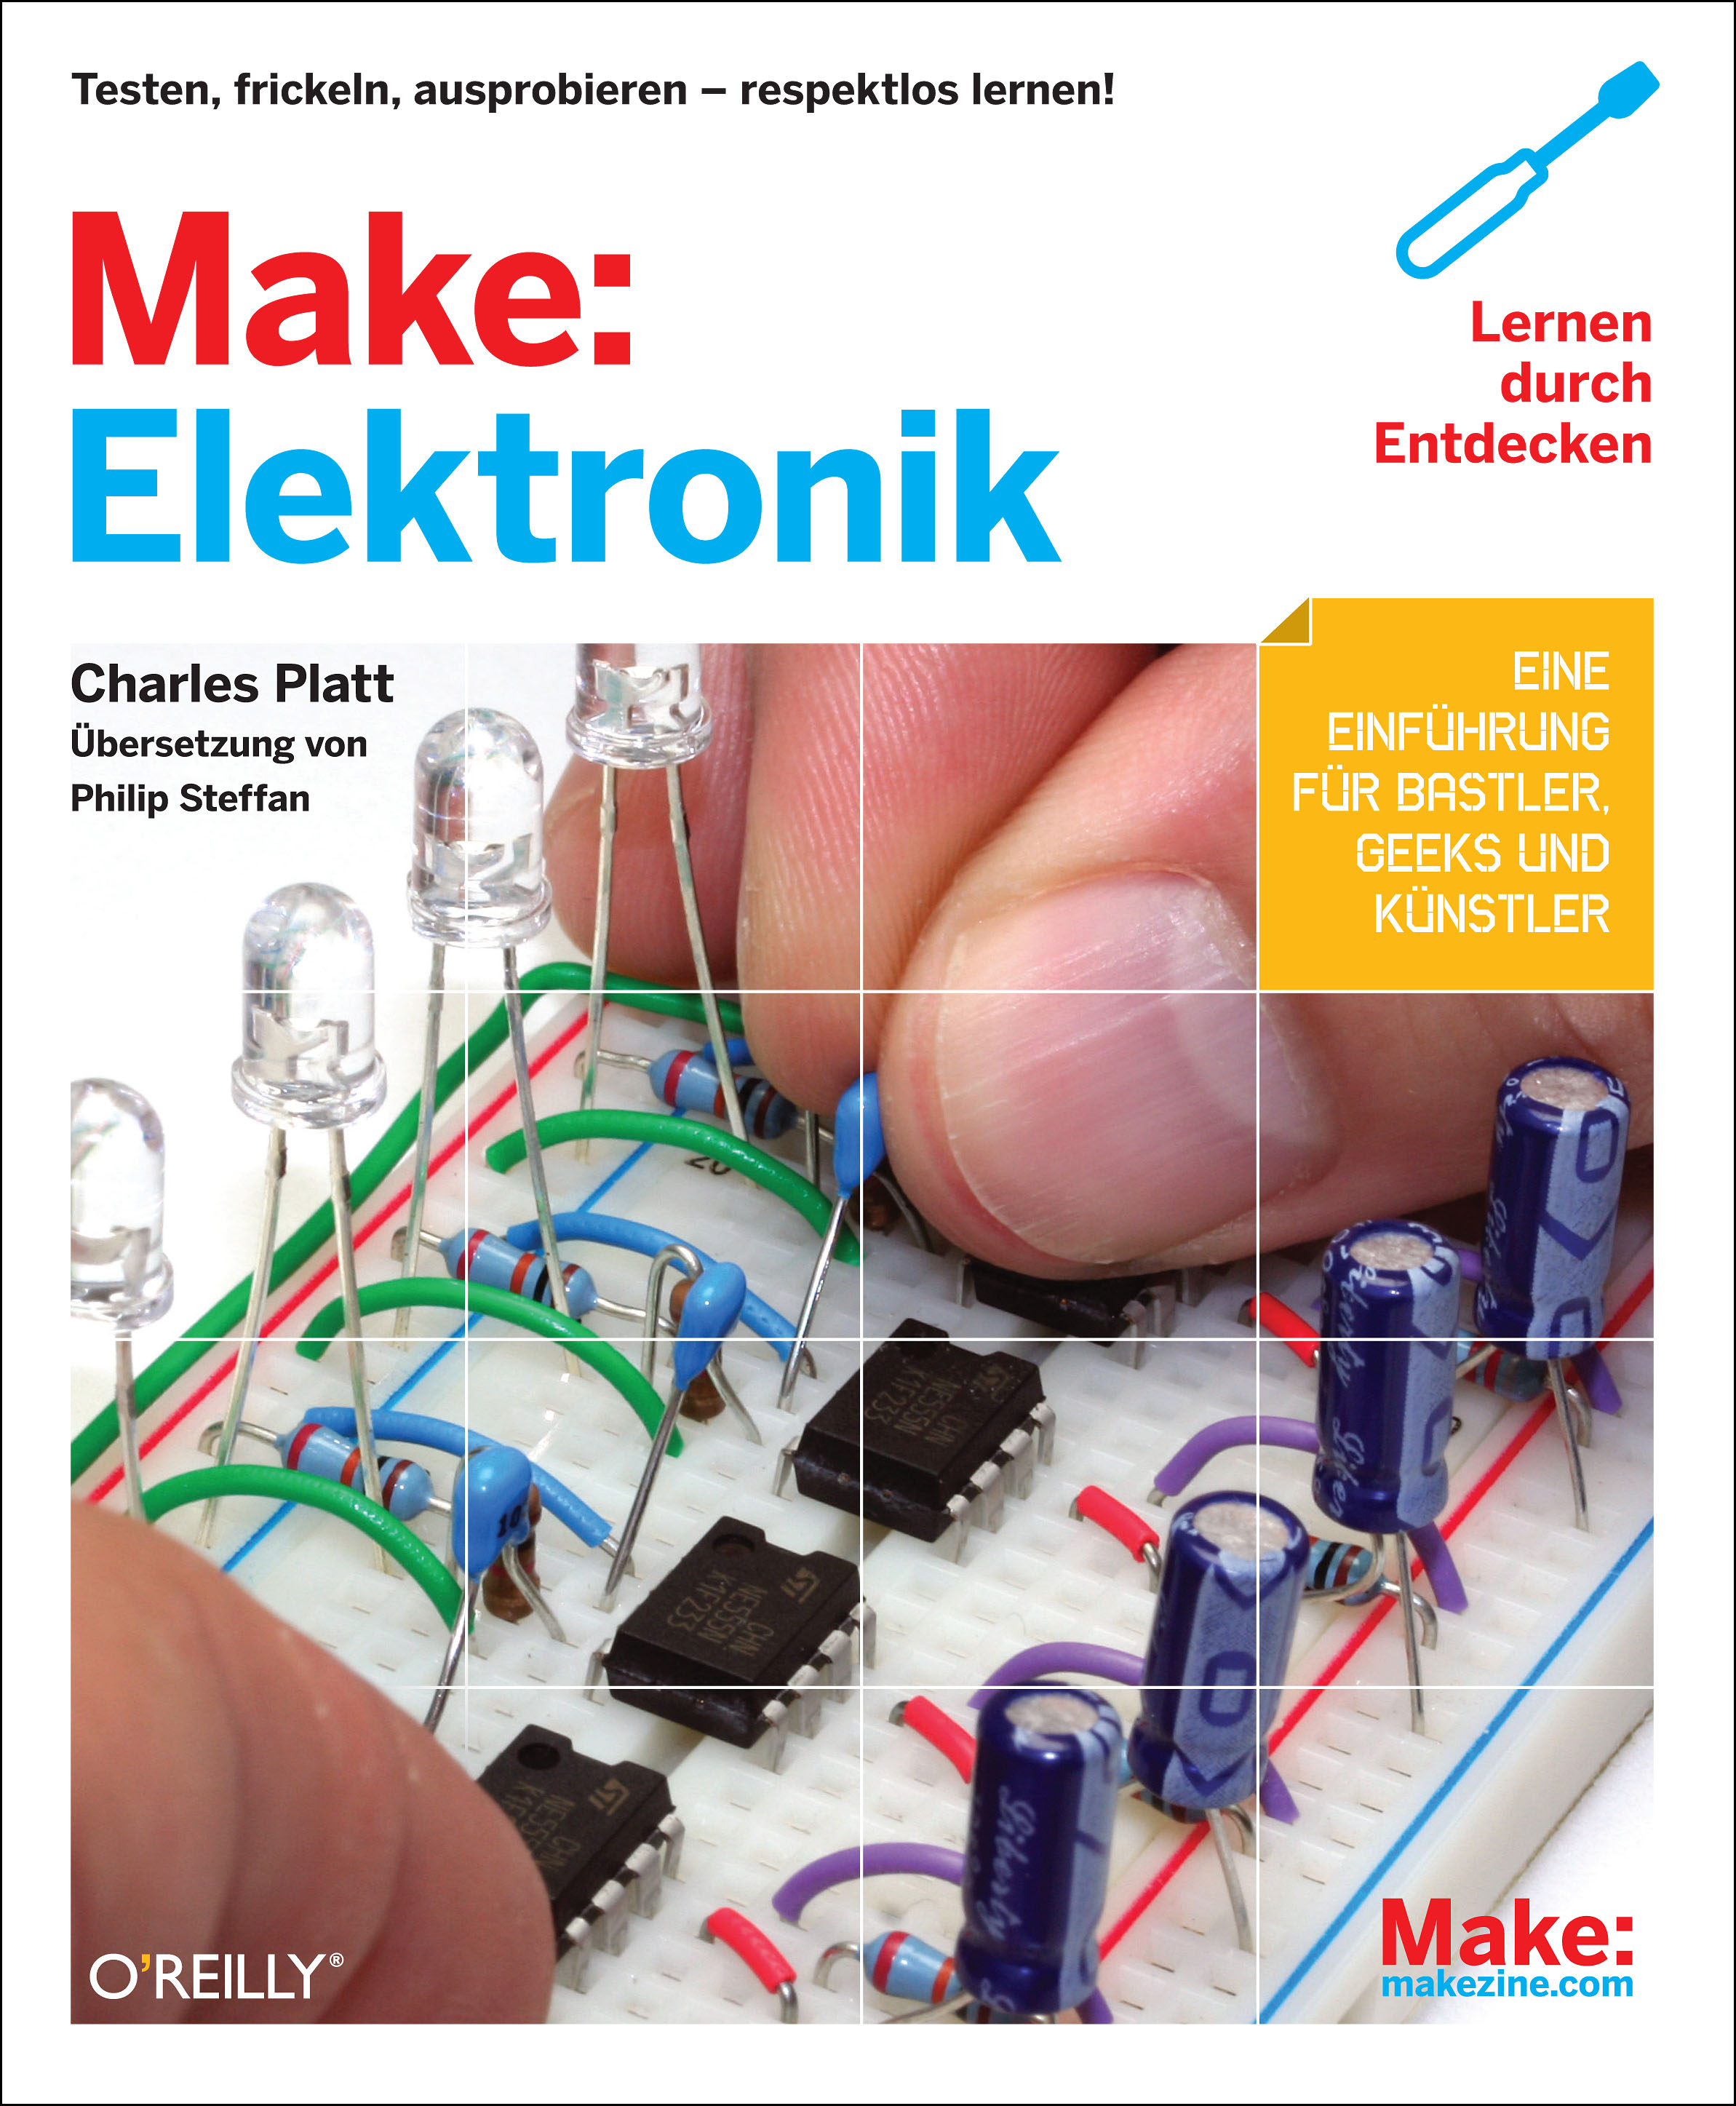 Make: Elektronik - Lernen durch Entdecken